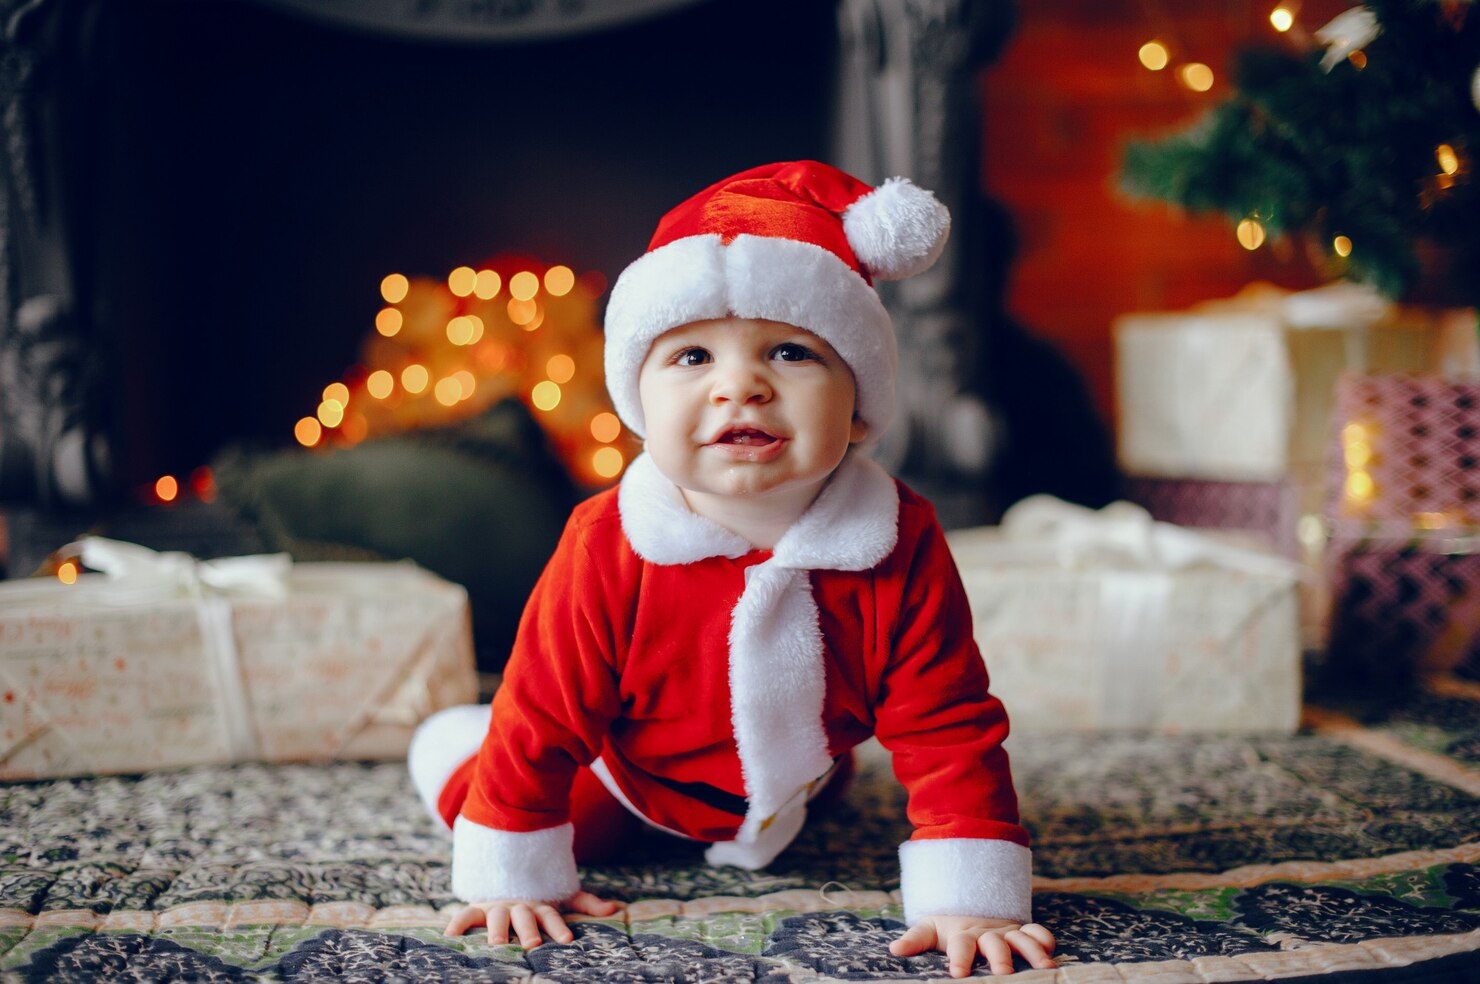 A baby dressed like Santa for Christmas.